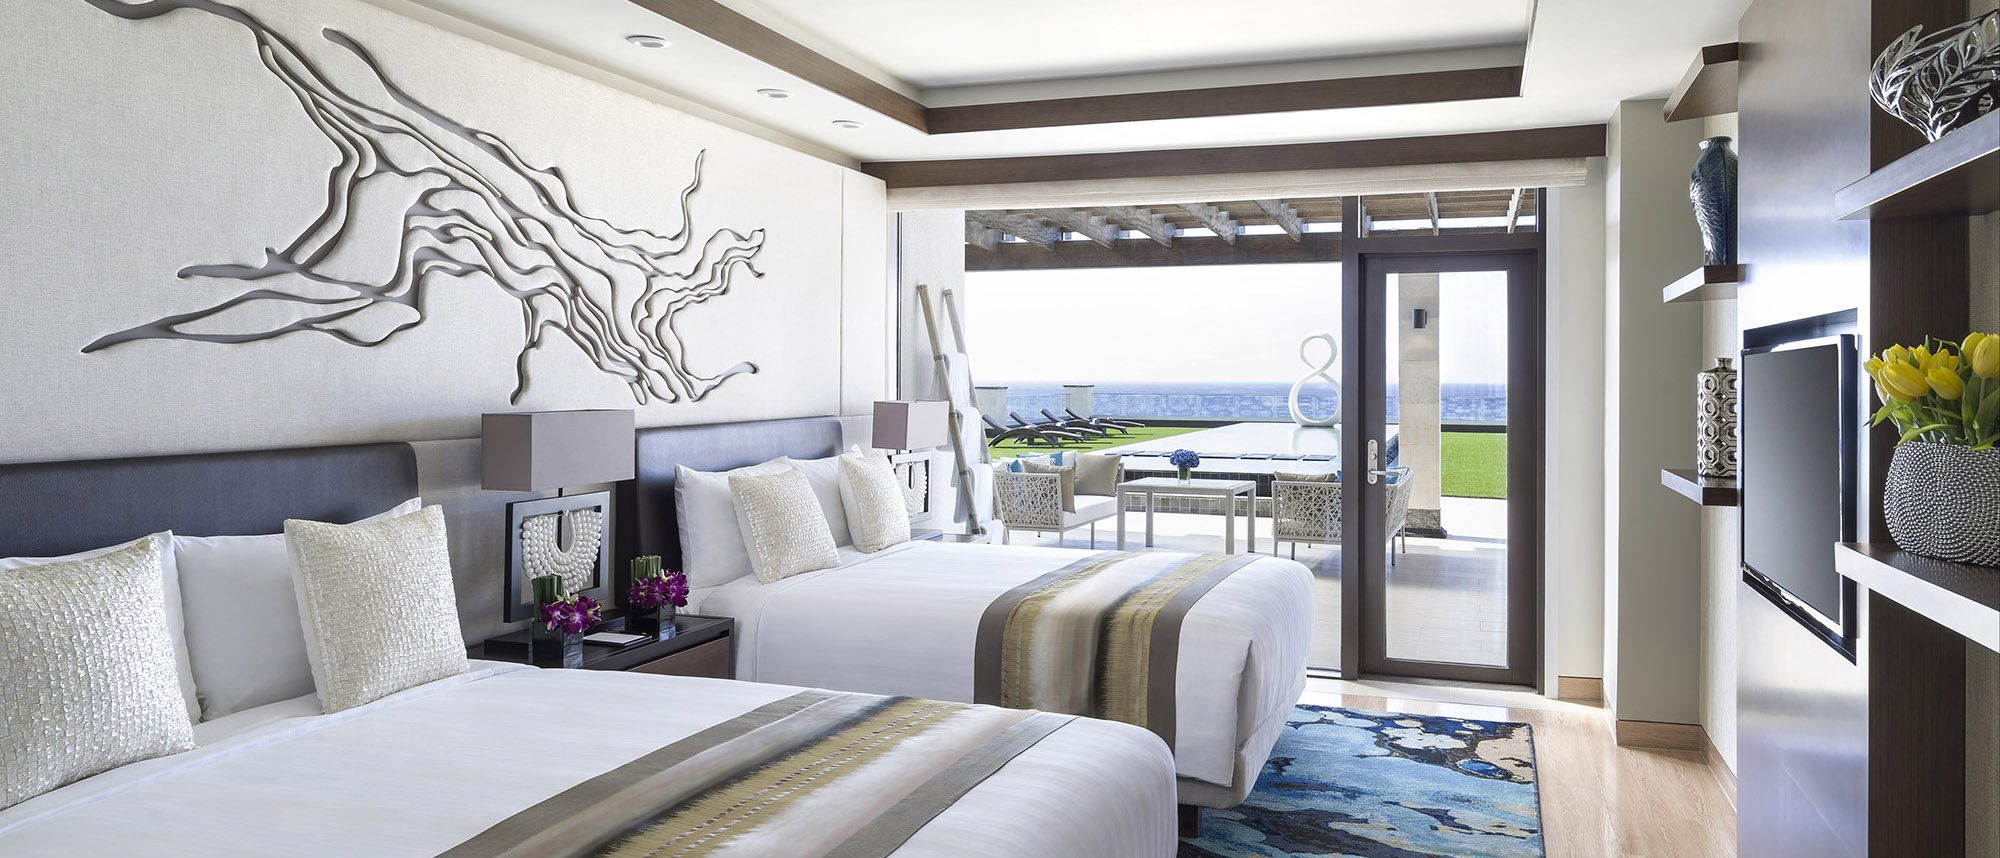 dusit thani guam resort - Villa Azul bedroom